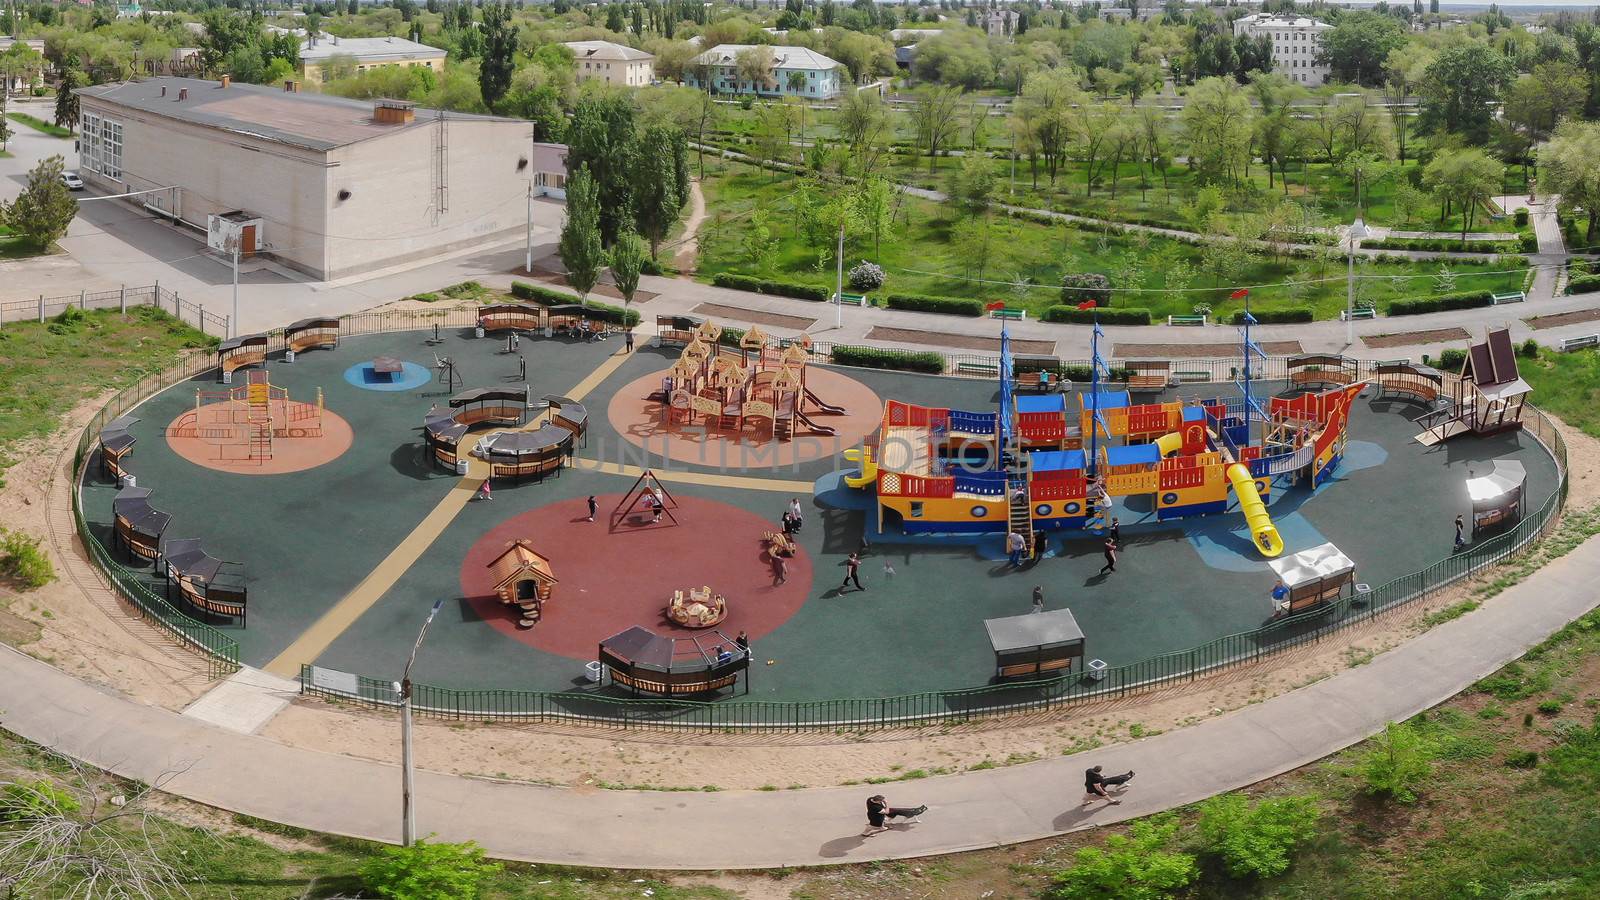 Children playground on yard activities in public park. Russia 2019. Children run, slide, swing, seesaw on modern playground. Urban neighborhood childhood concept.